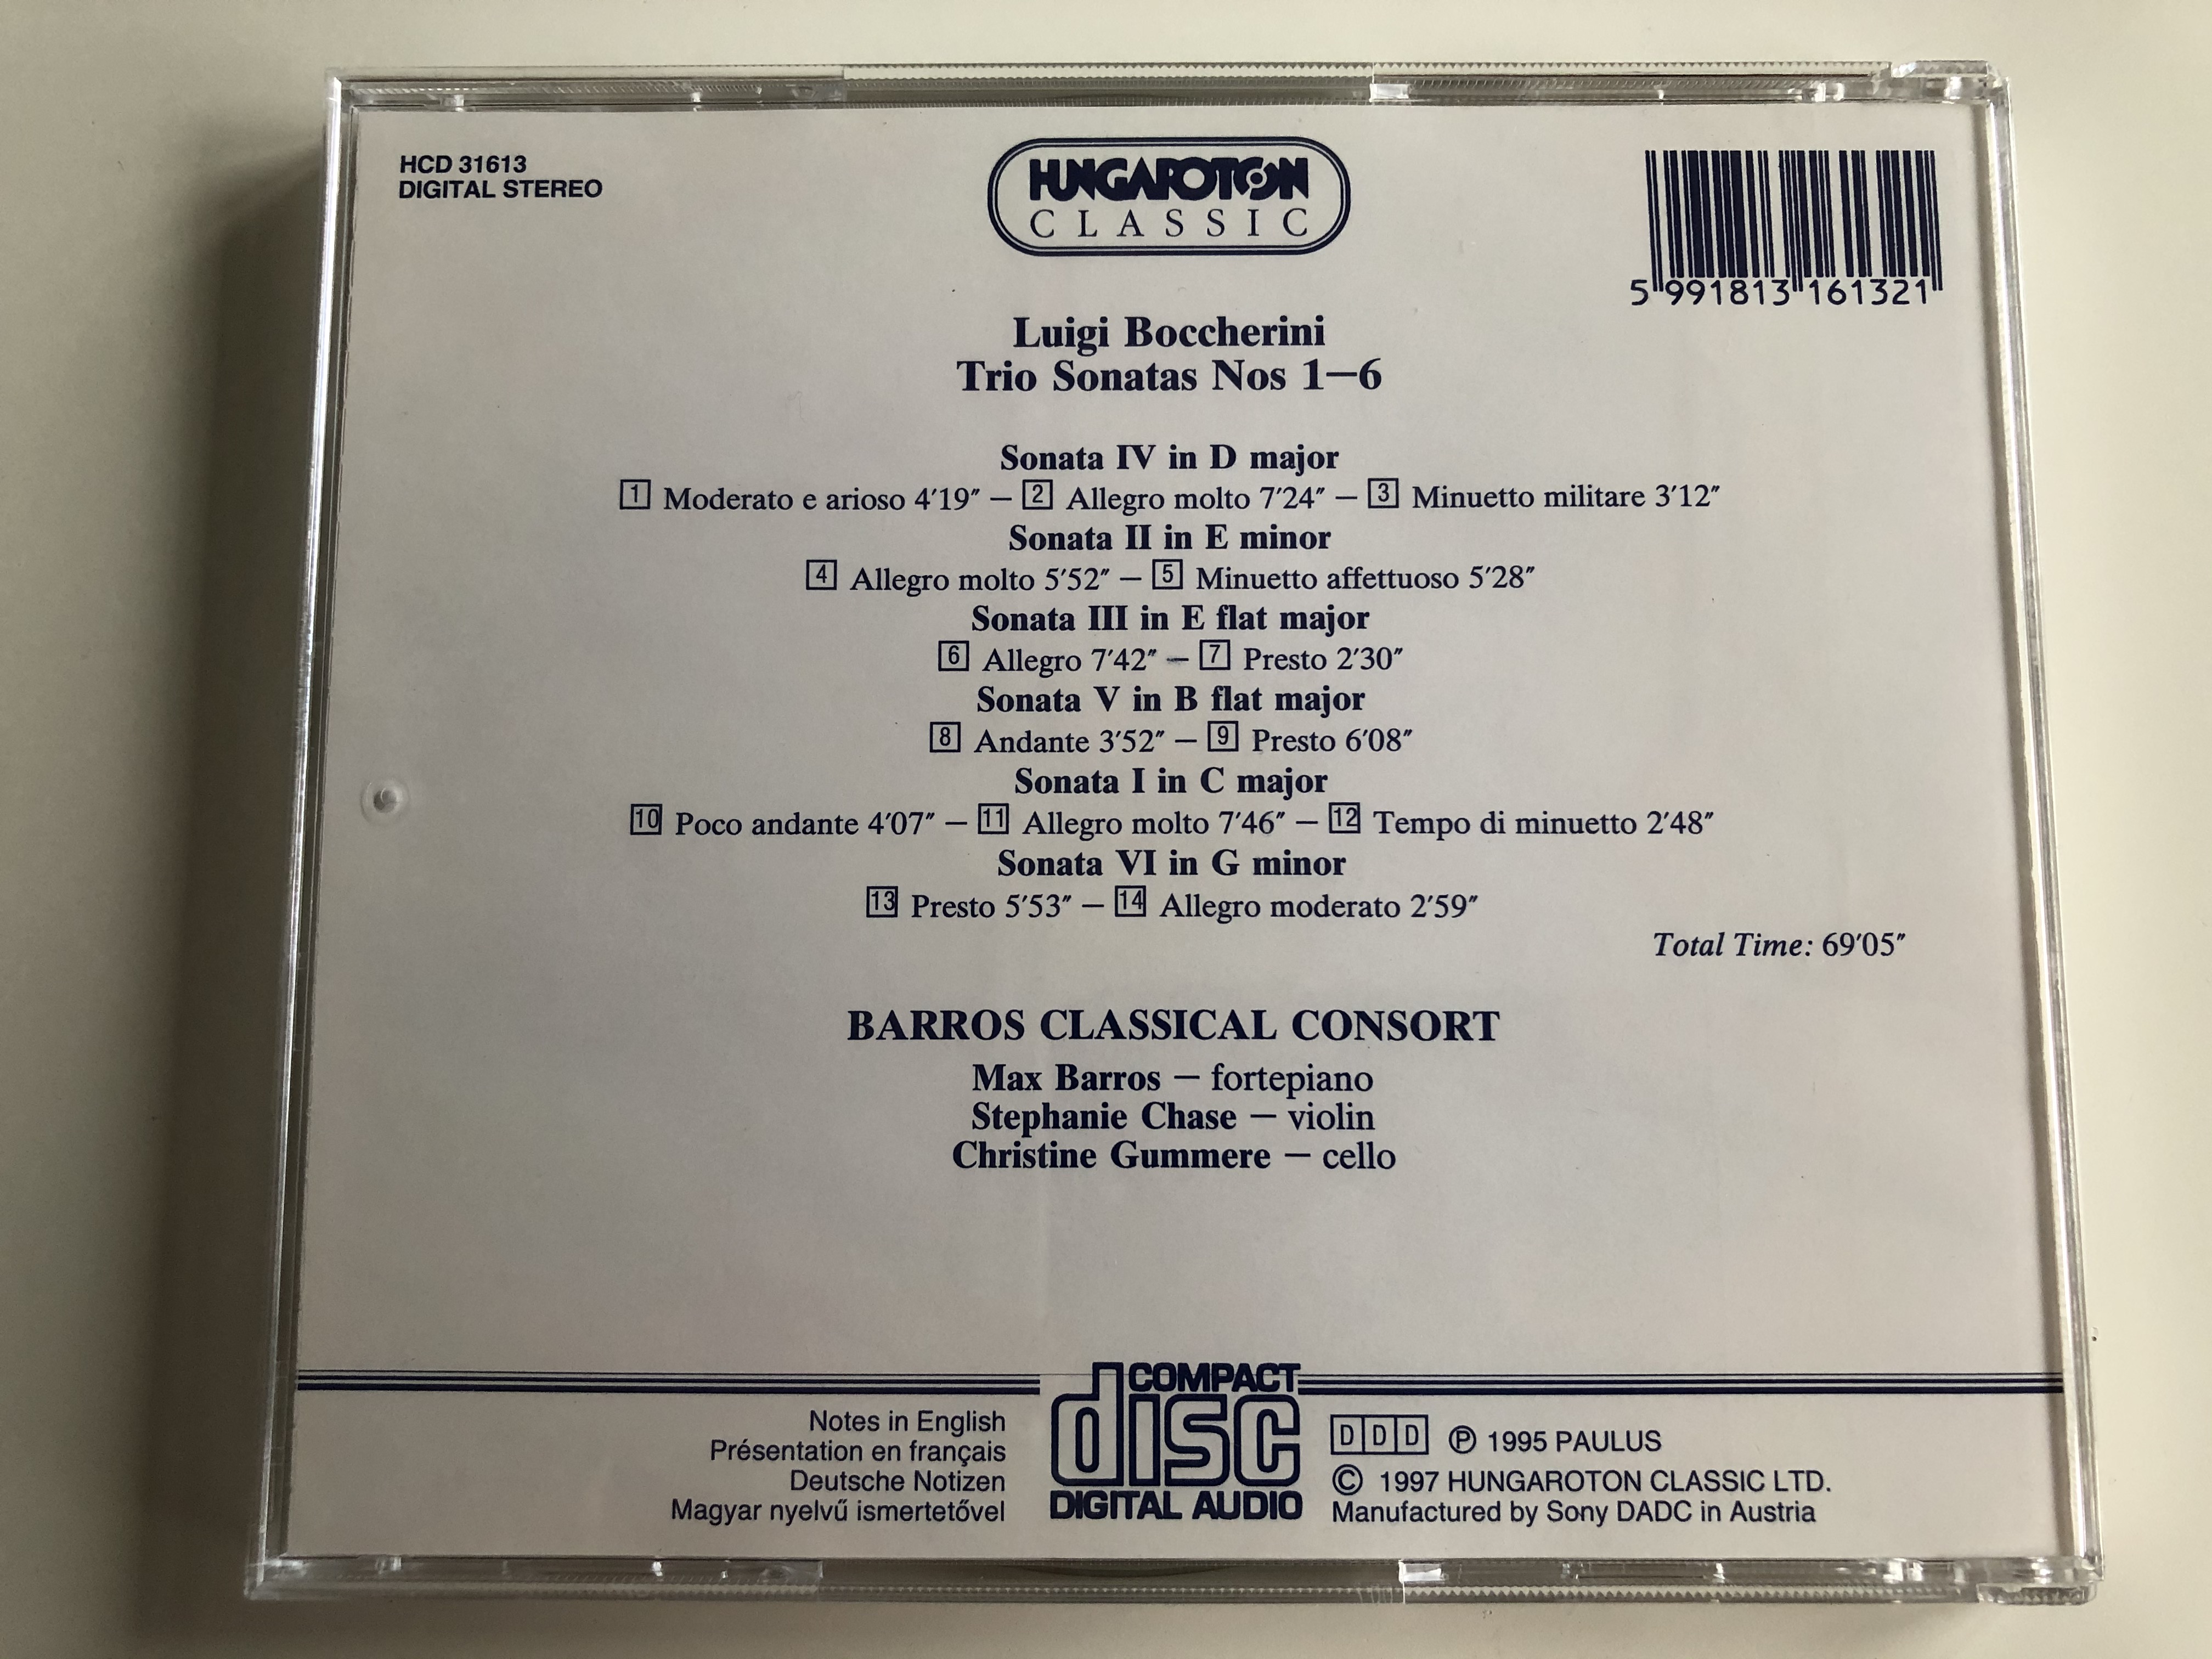 luigi-boccherini-trio-sonatas-nos-1-6-hungaroton-classic-audio-cd-1995-stereo-hcd-31613-3-.jpg